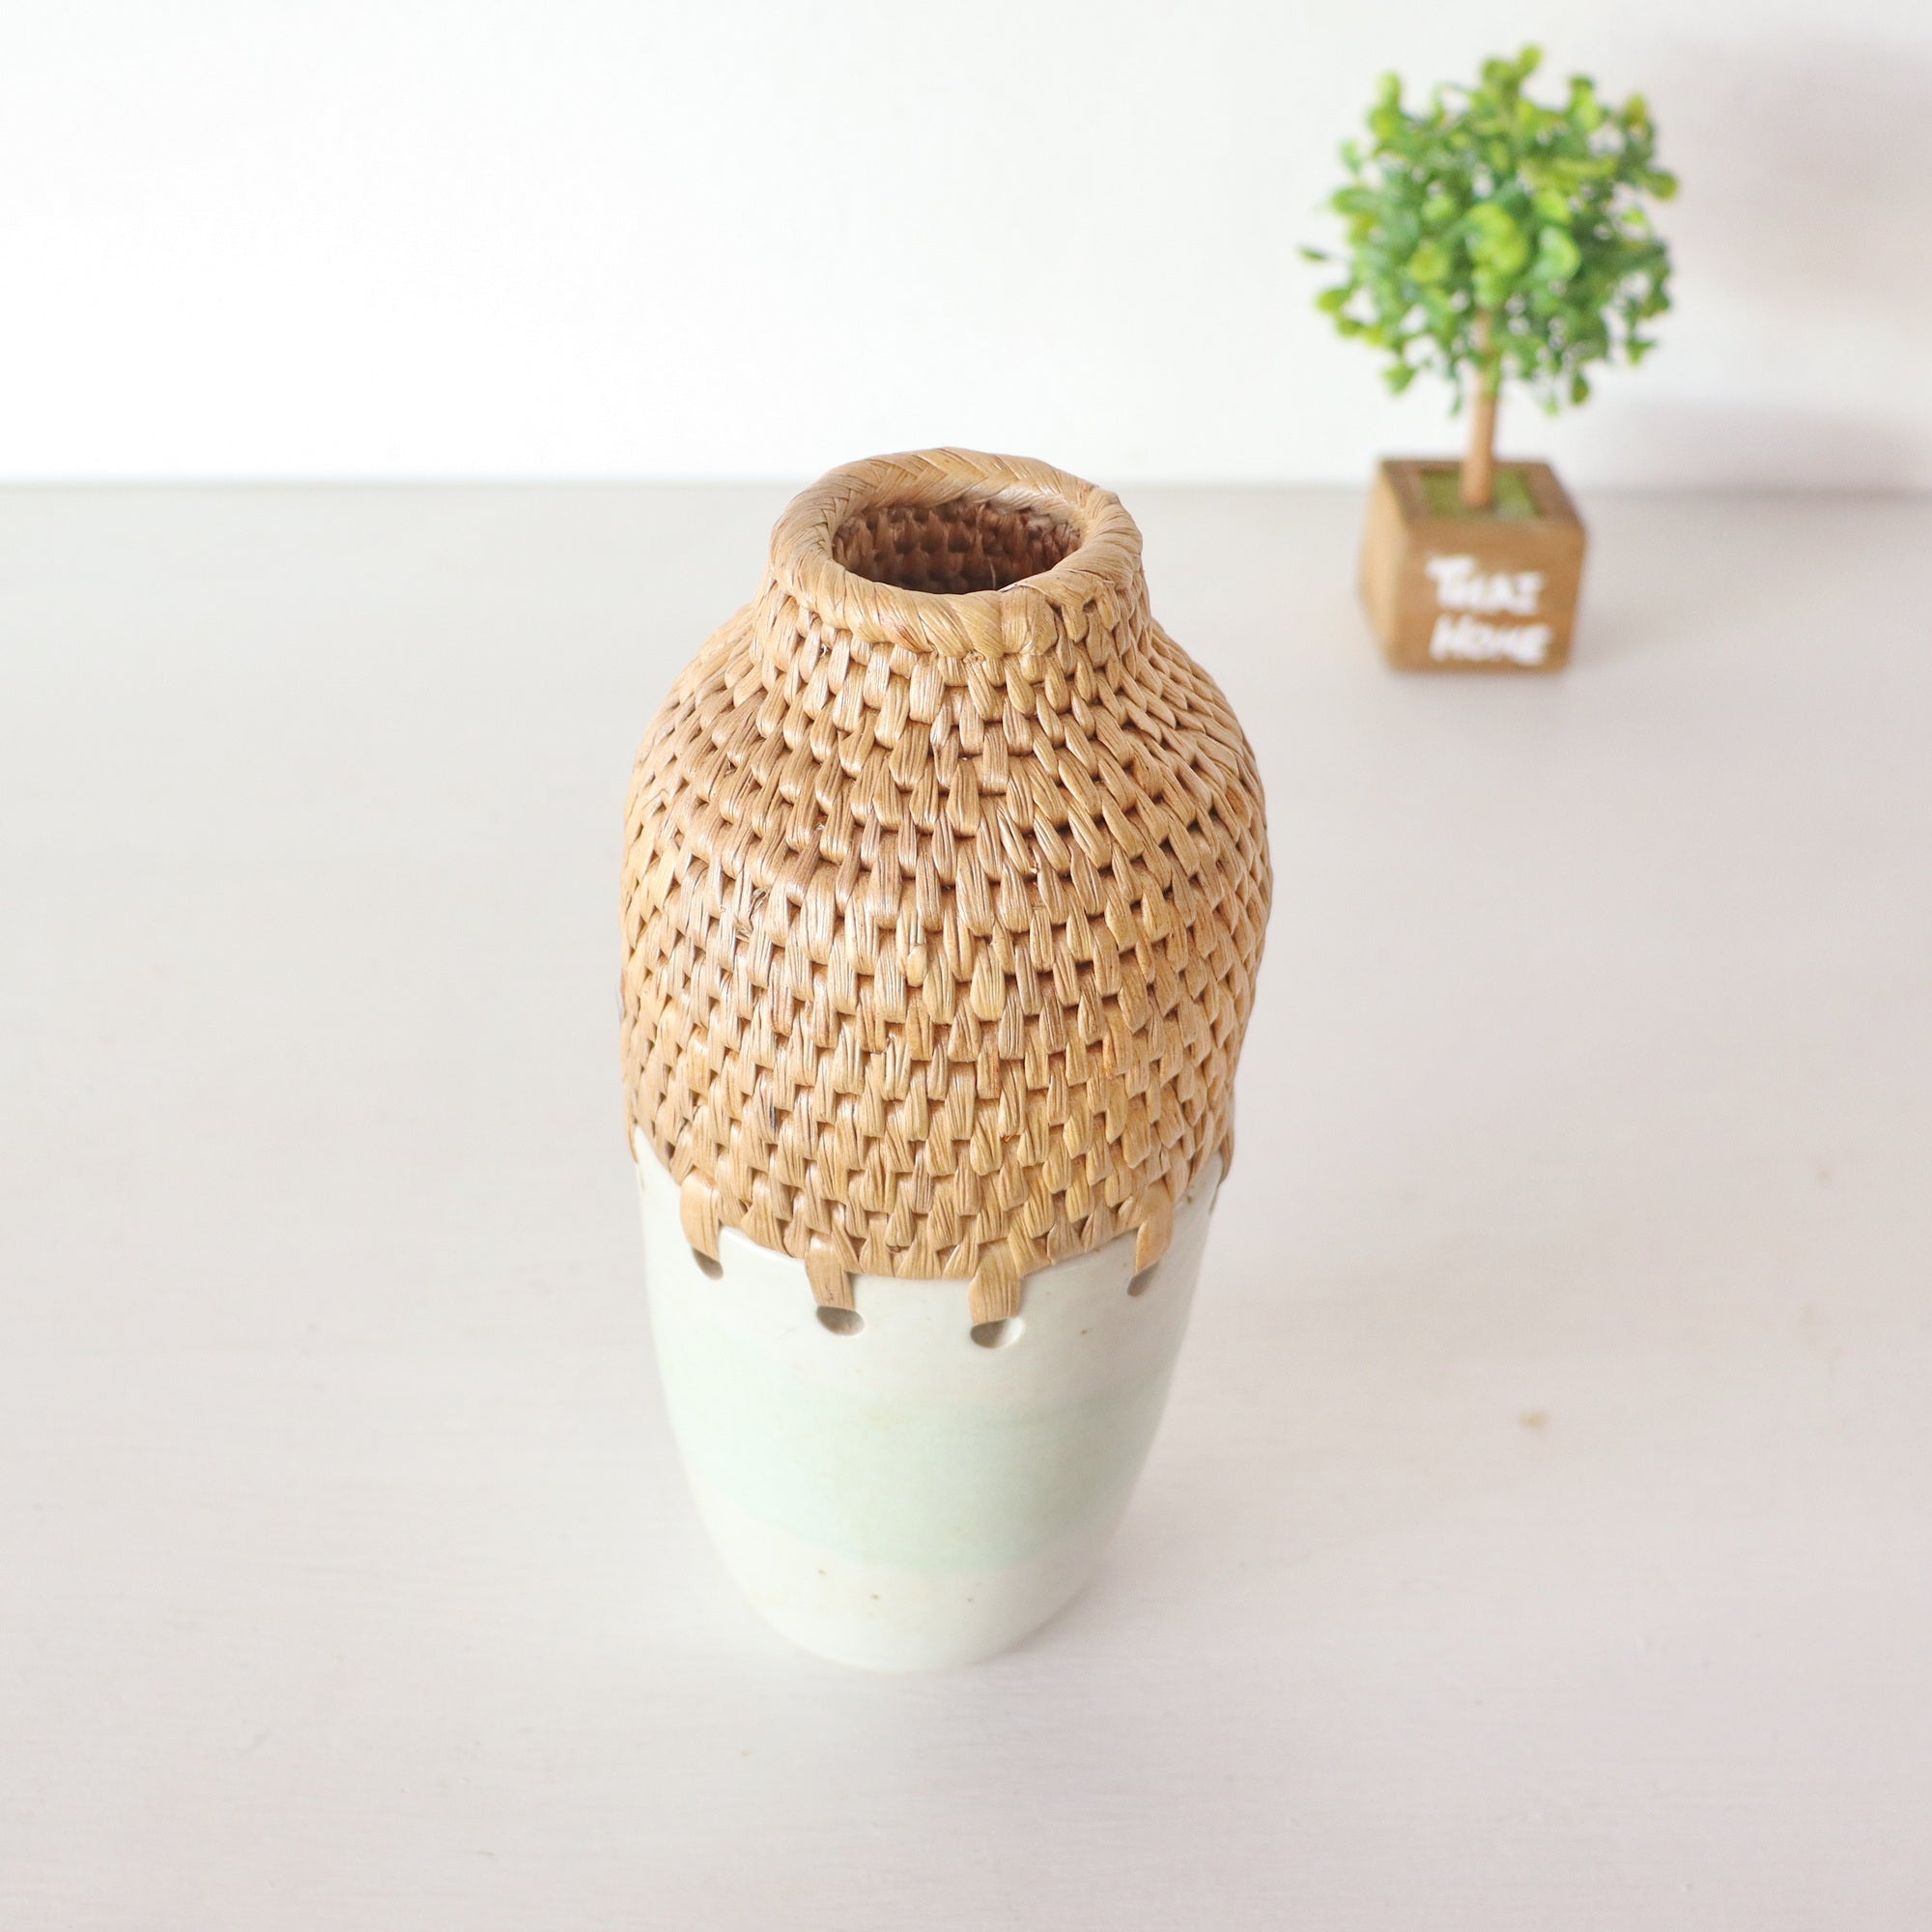 RA NI - Ceramic and Hand woven seagrass Vase